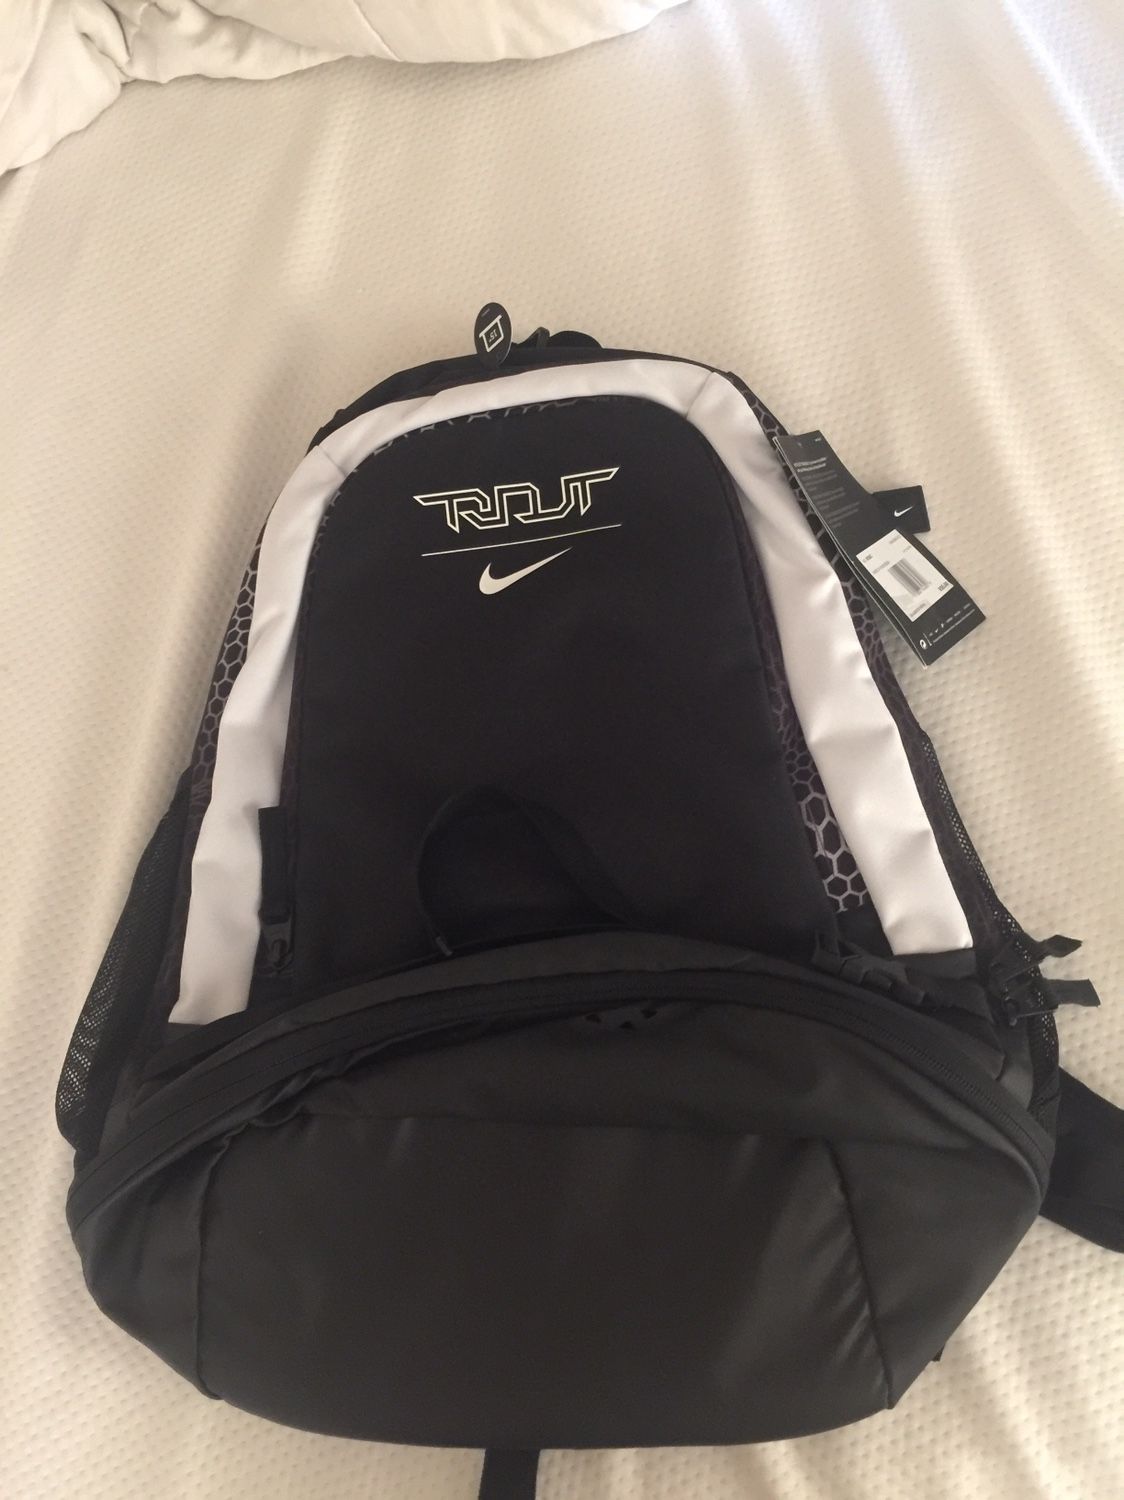 (New) Nike Trout Vapor Baseball Bat Backpack Black with Laptop Sleeve